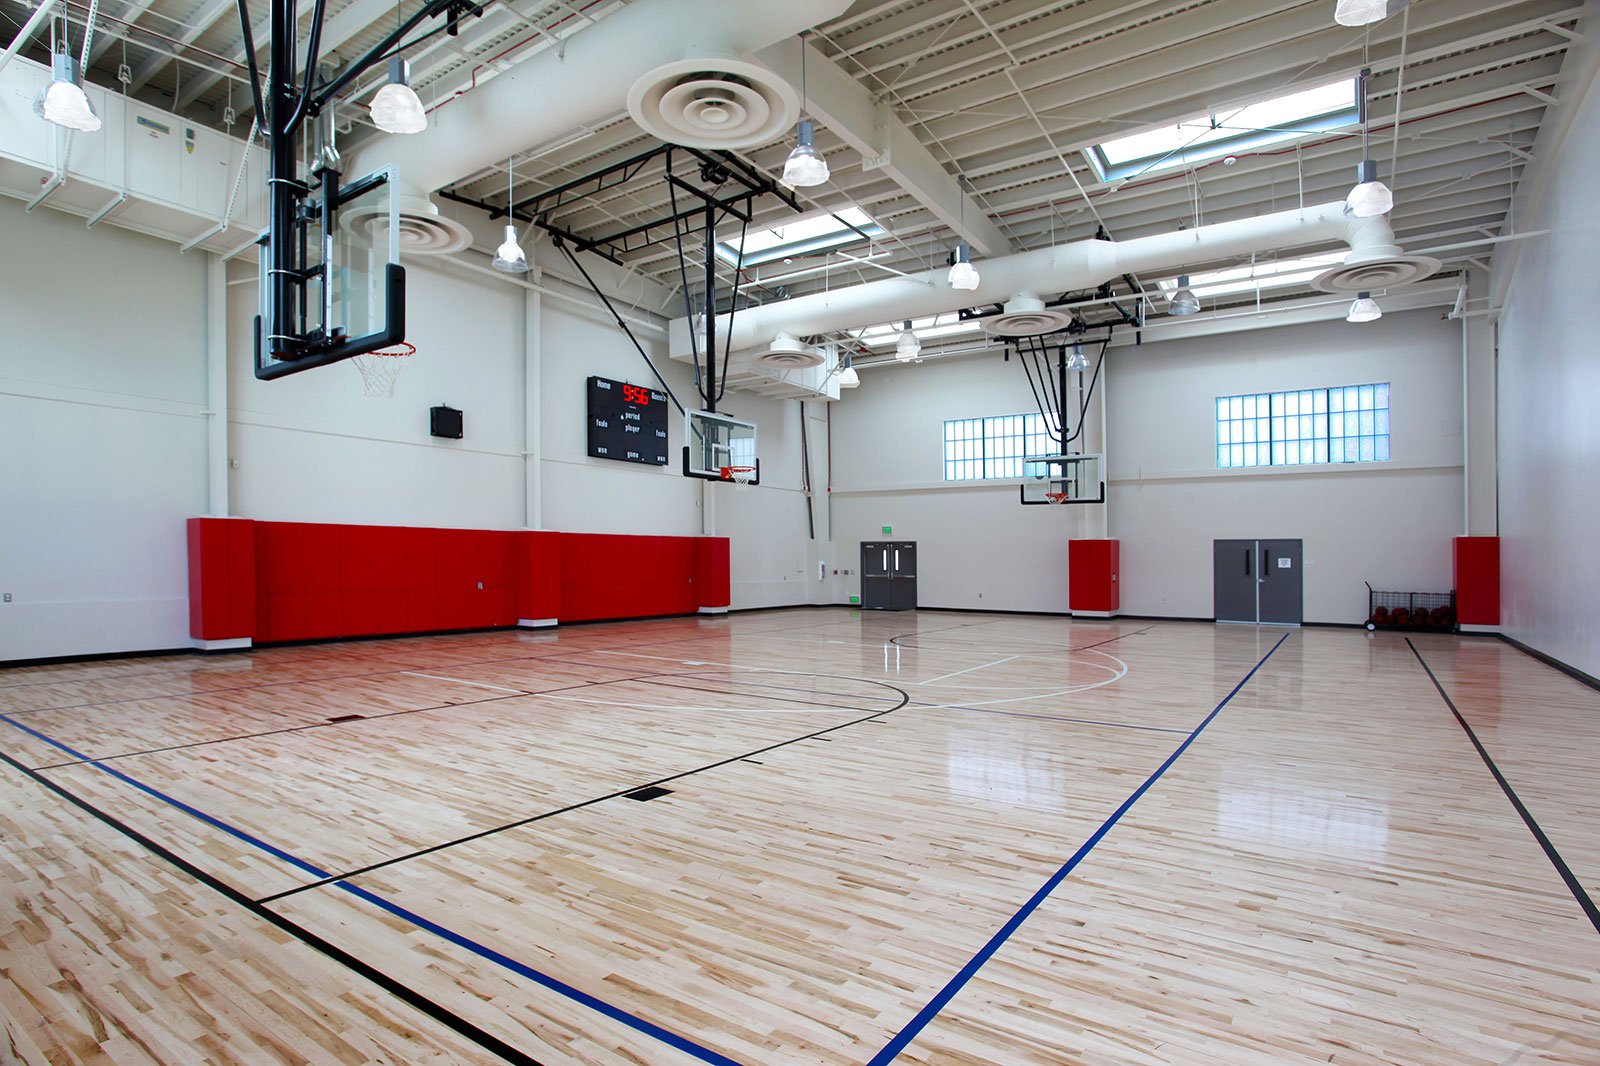 Peninsula YMCA basketball court